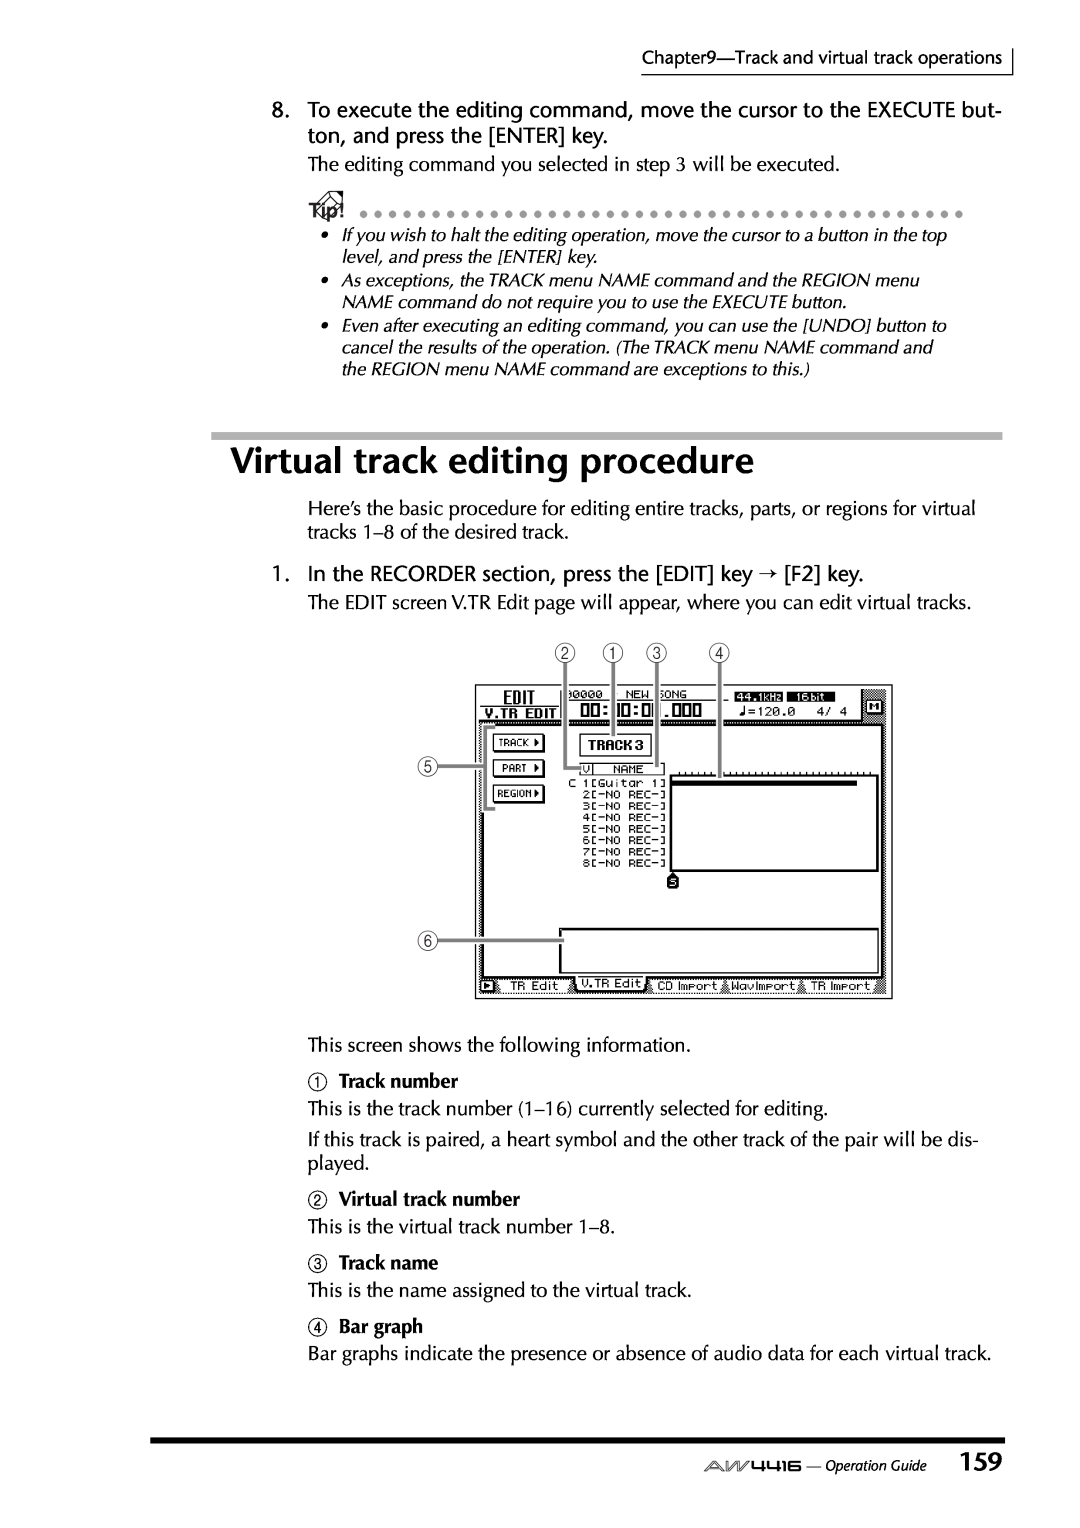 Yamaha AW4416 manual Virtual track editing procedure, 1Track number, BVirtual track number, CTrack name, DBar graph 